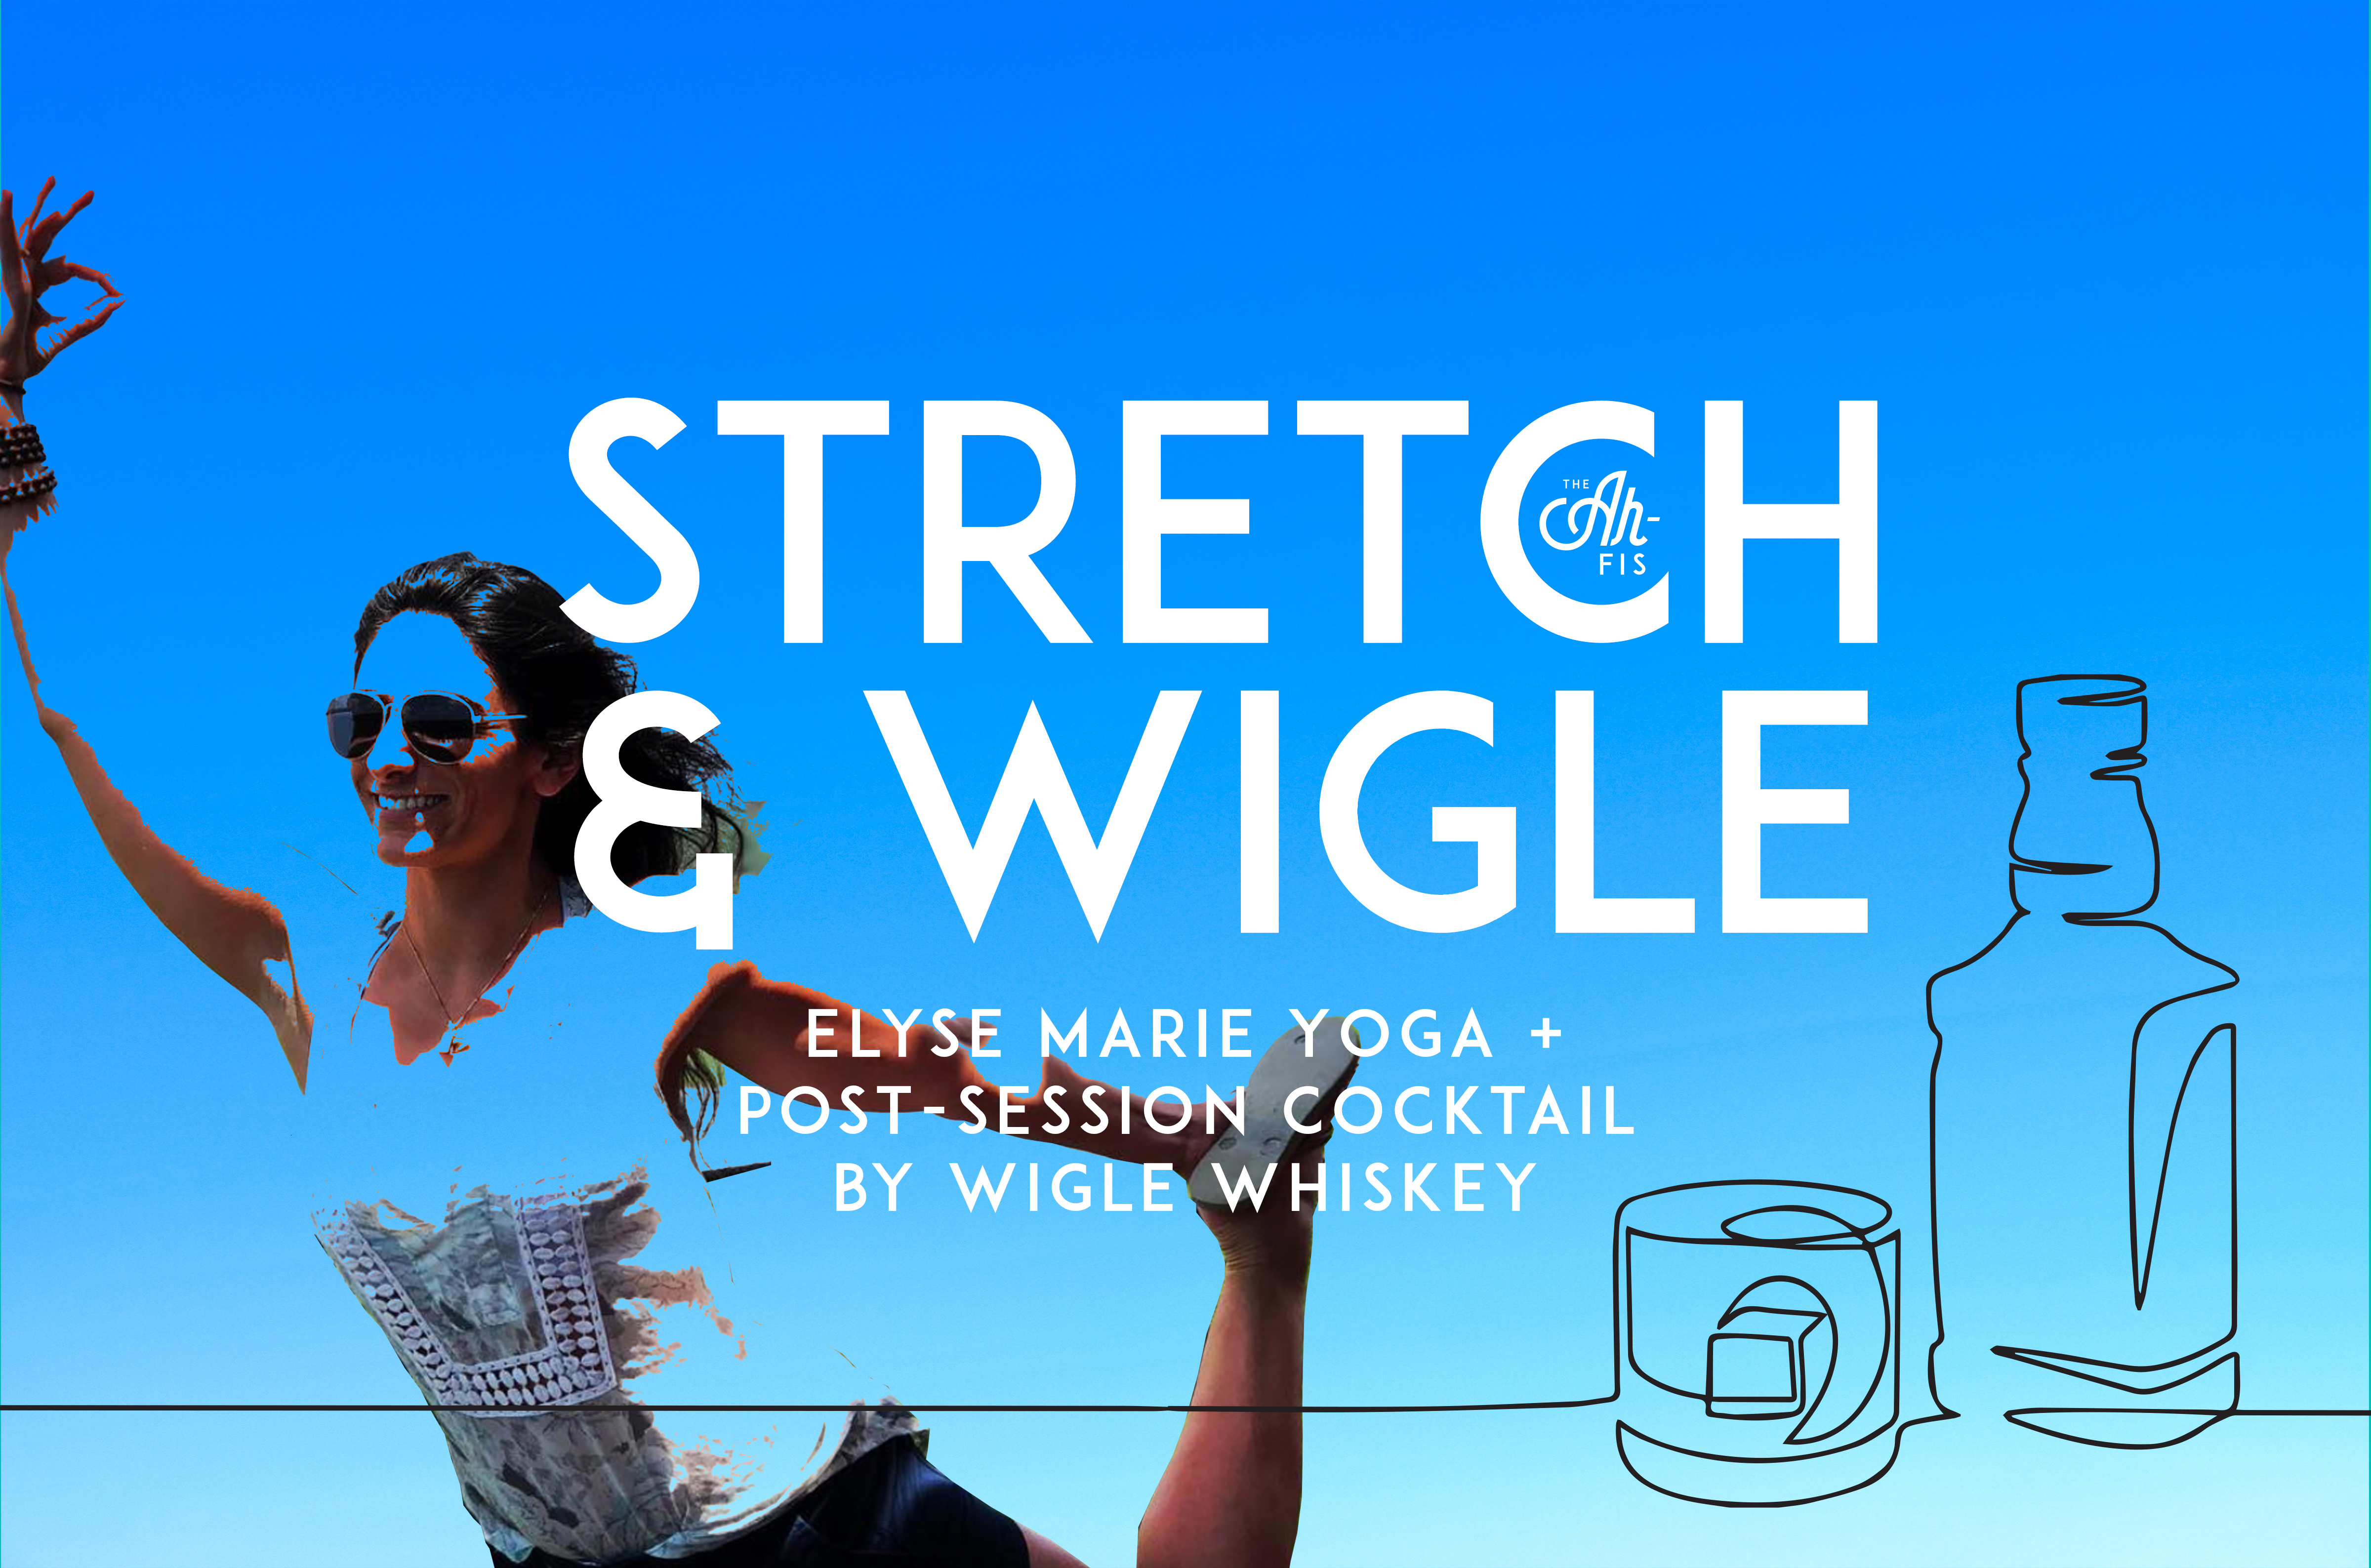 Copy of Stretch & Wigle (Elyse Marie Yoga + Wigle Whiskey)